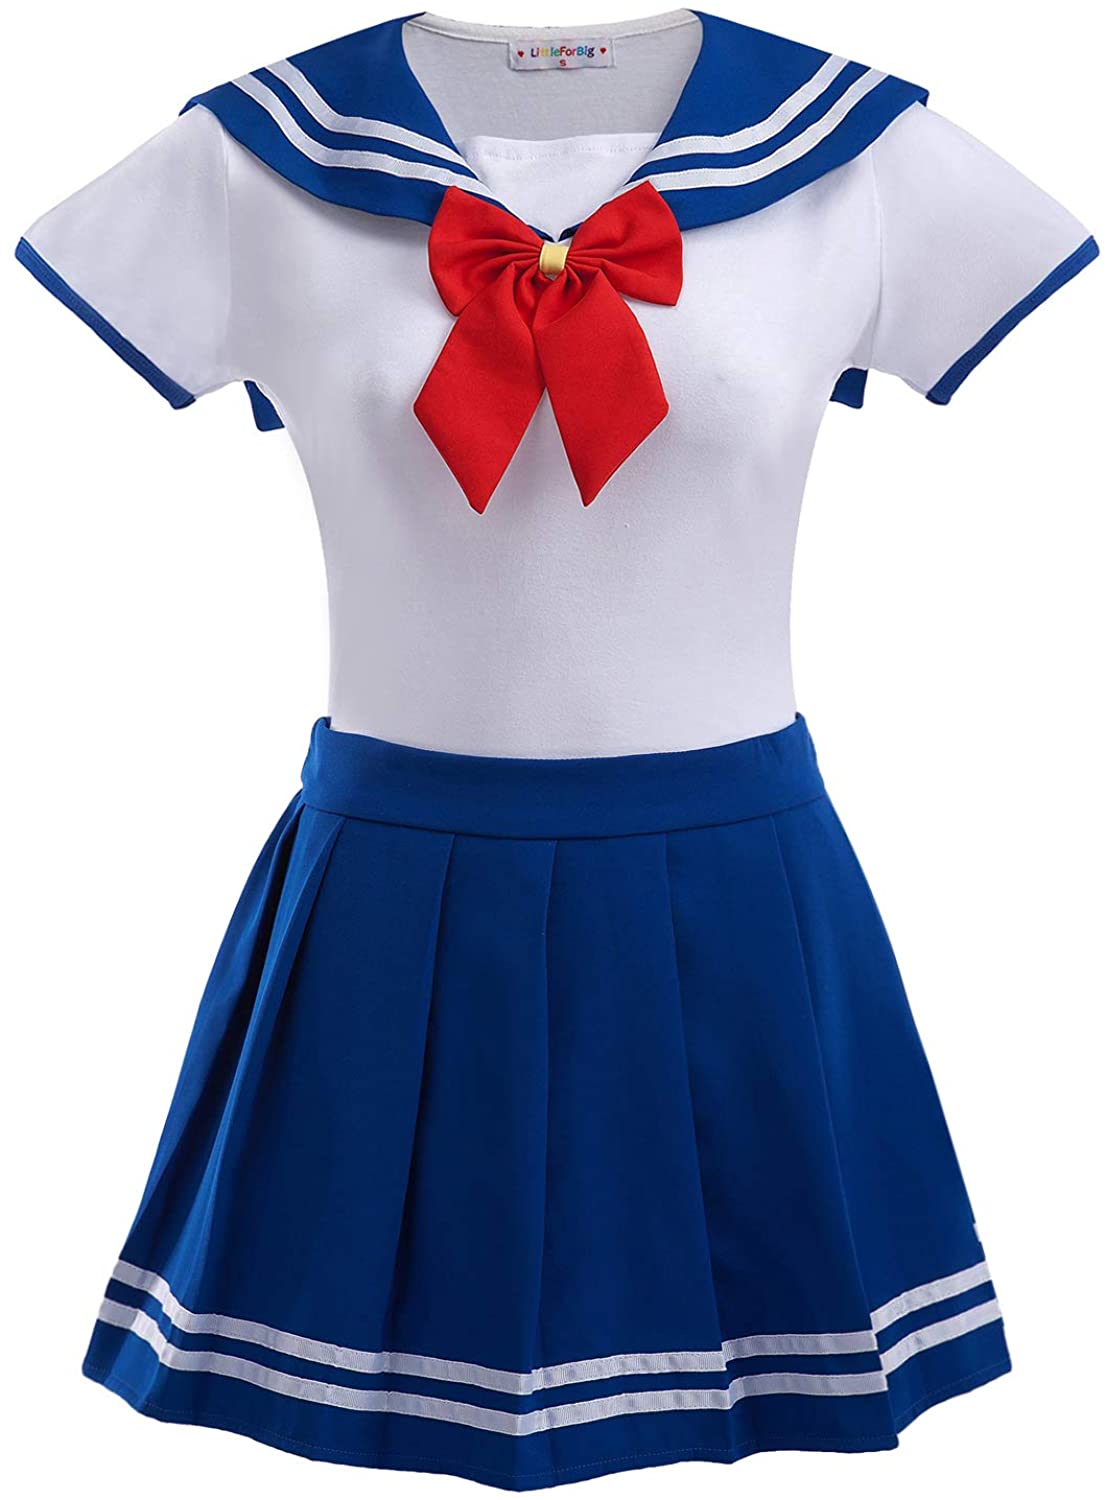 Snap Crotch Romper Onesie Skirt Set Sailorblue2